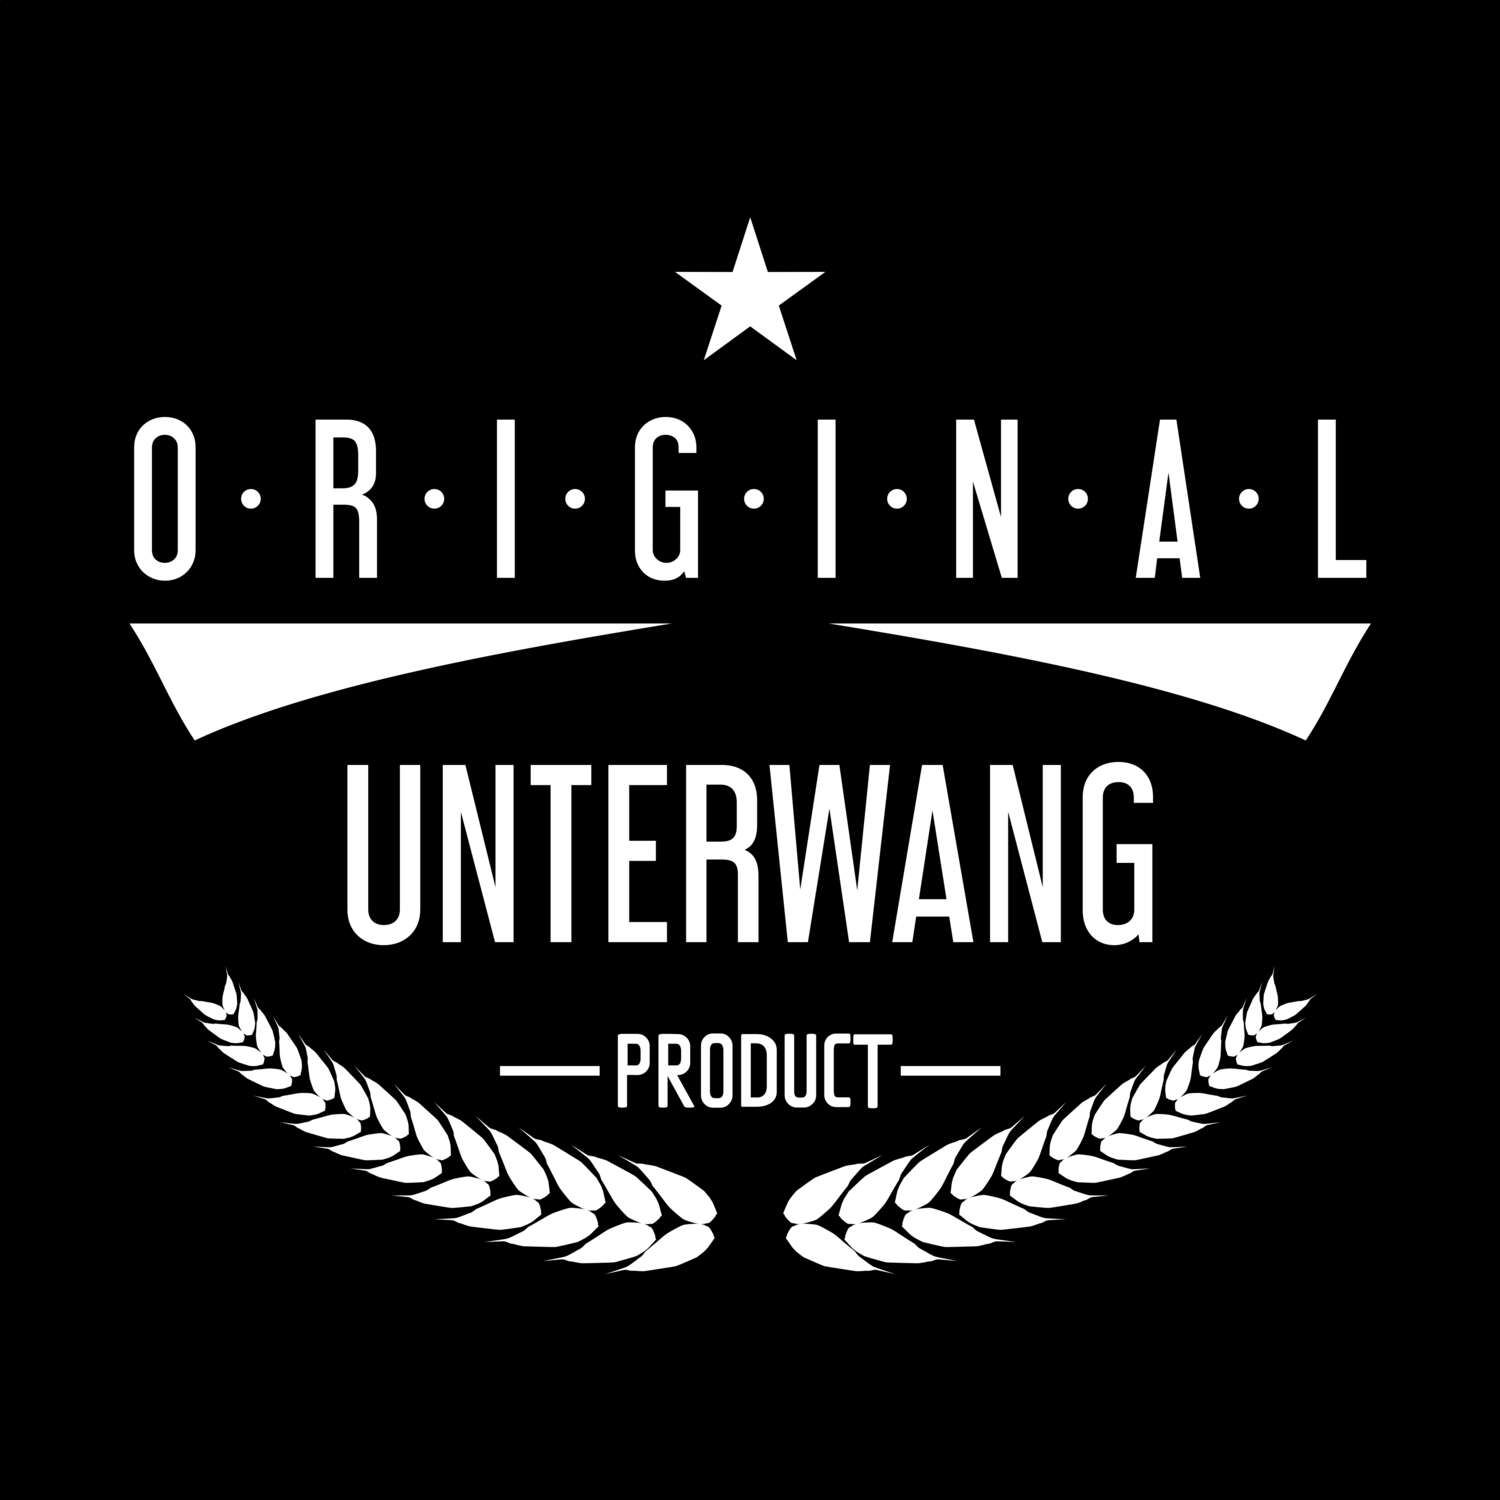 Unterwang T-Shirt »Original Product«